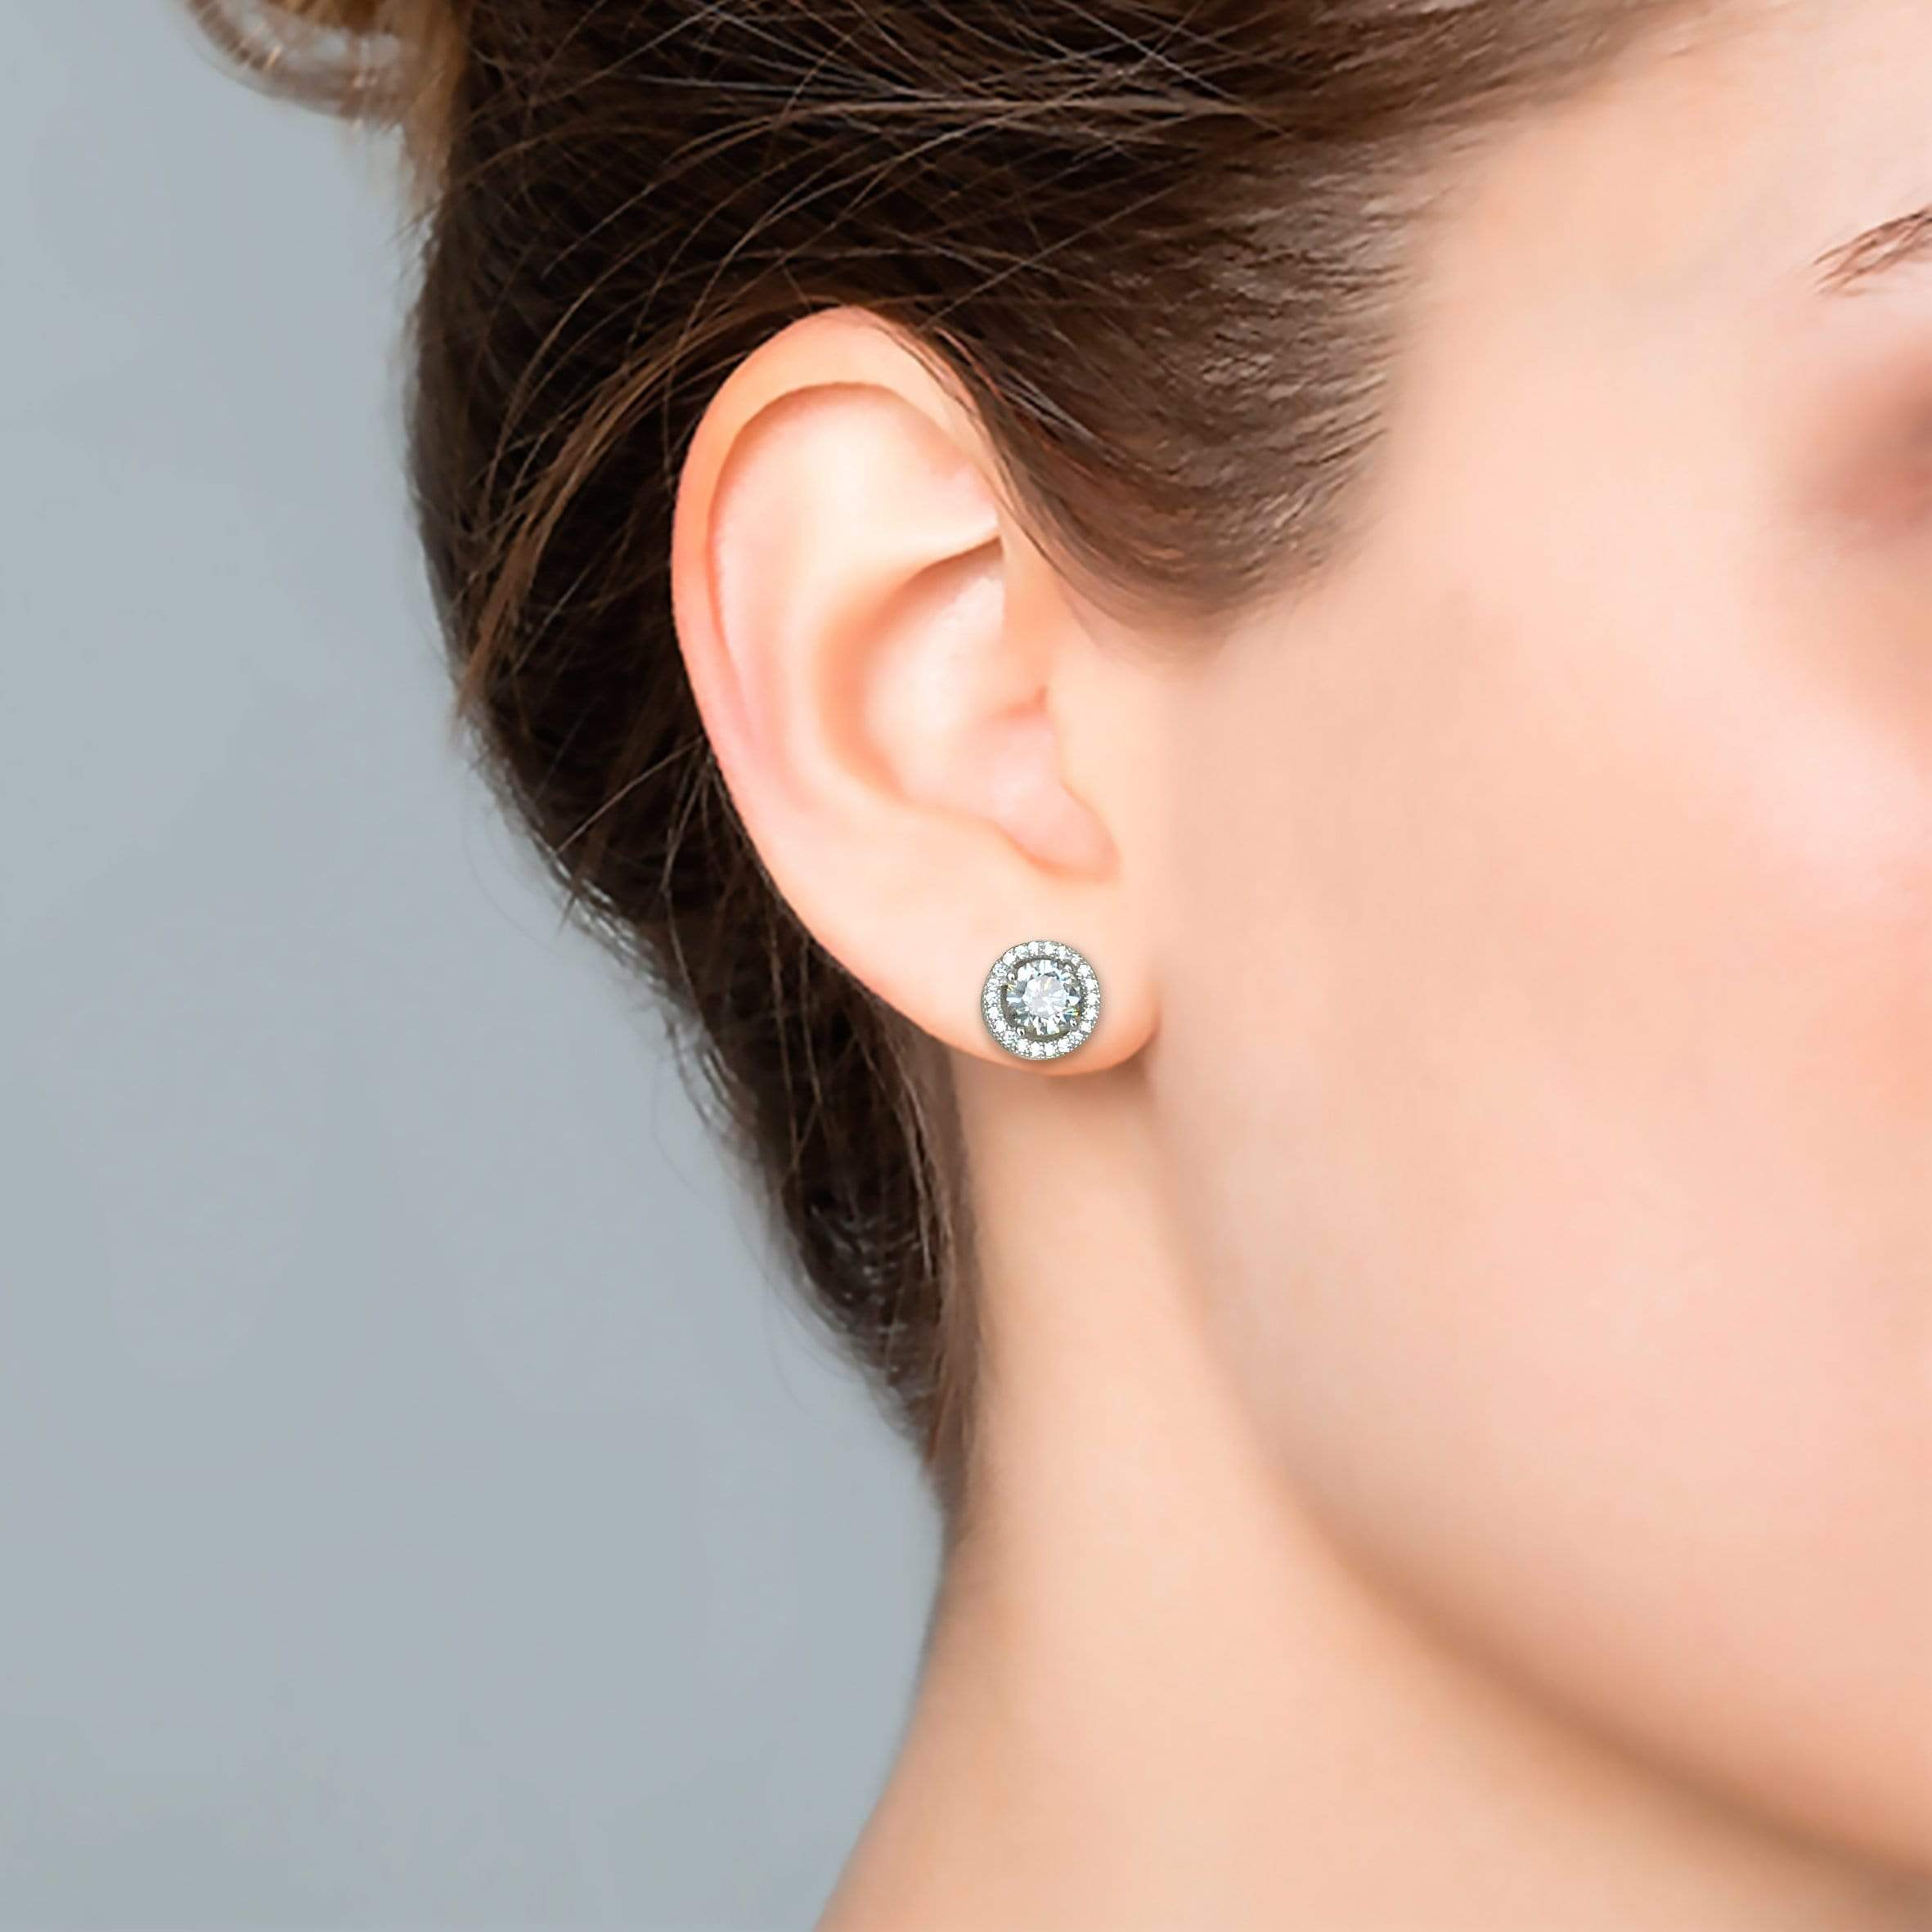 Lynora Jewellery Earring Sterling Silver Halo Elevated Earrings Sterling Silver